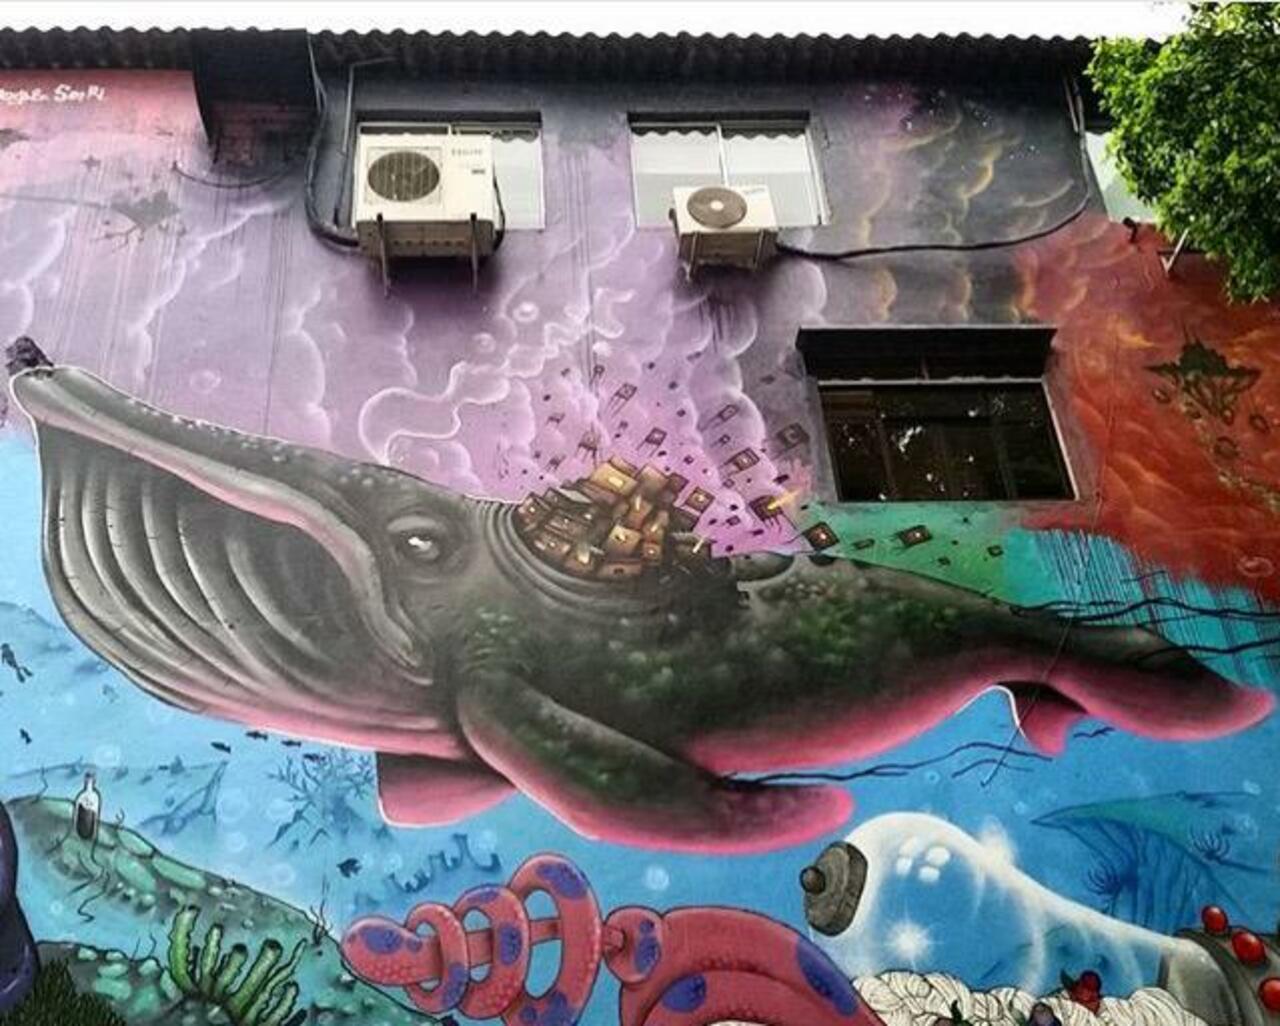 Street Art by joks_johnes Pinheiros, São Paulo 

#art #mural #graffiti #streetart http://t.co/SLZR9m6J37 googlestreetart chinatoniq